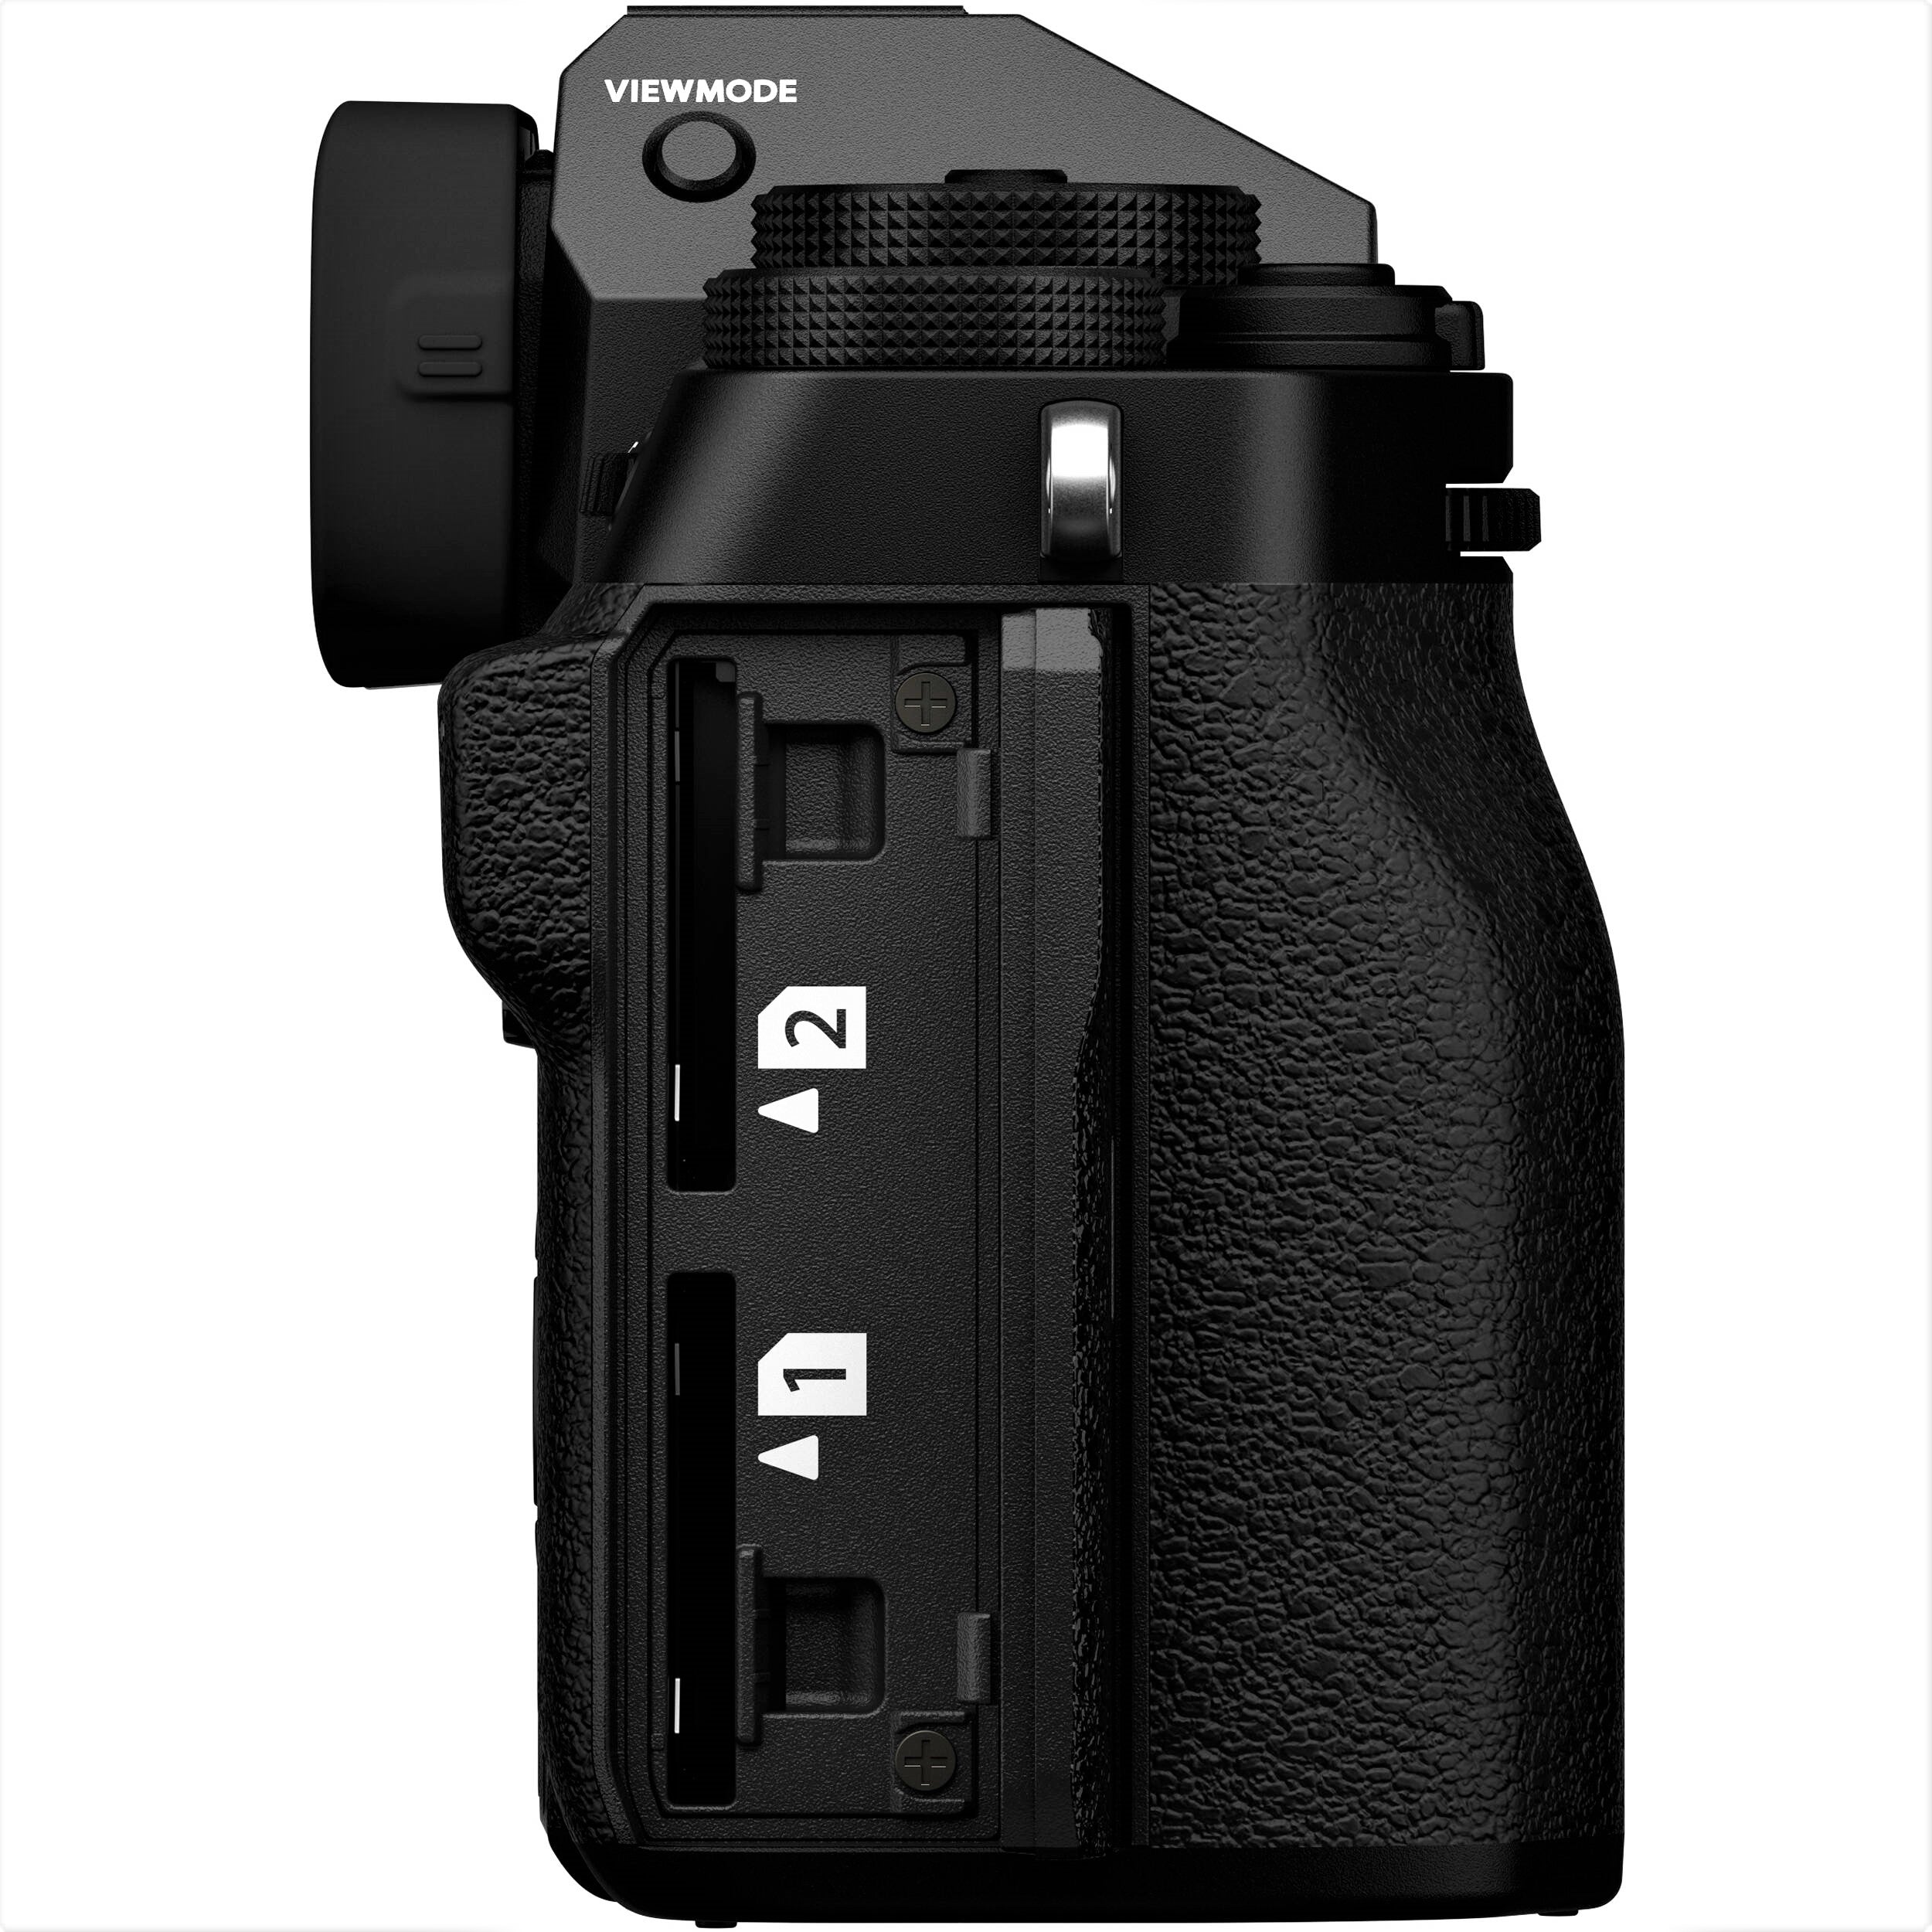 Fujifilm X-T5 Mirrorless Camera with 18-55mm Lens (Black) - Card Slots